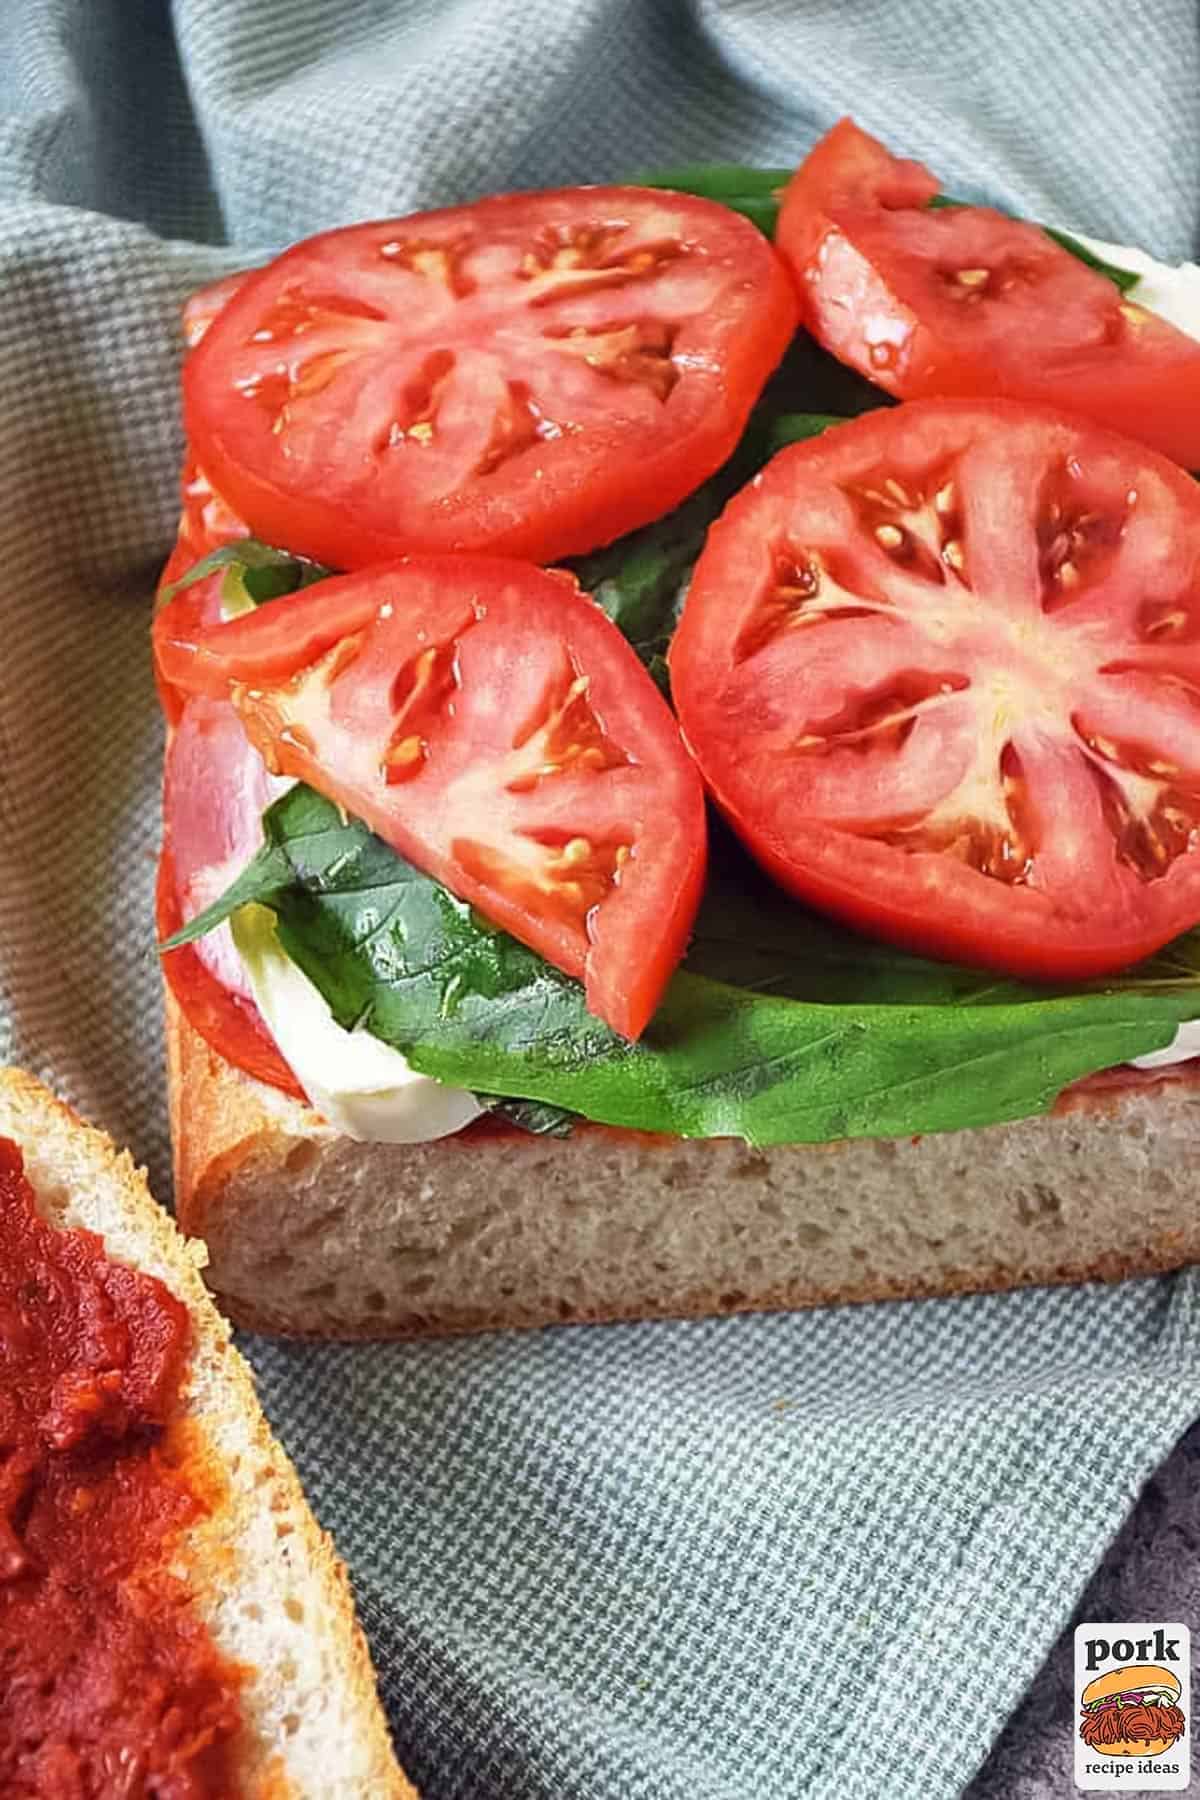 tomato, basil and mozzarella added to the sandwich